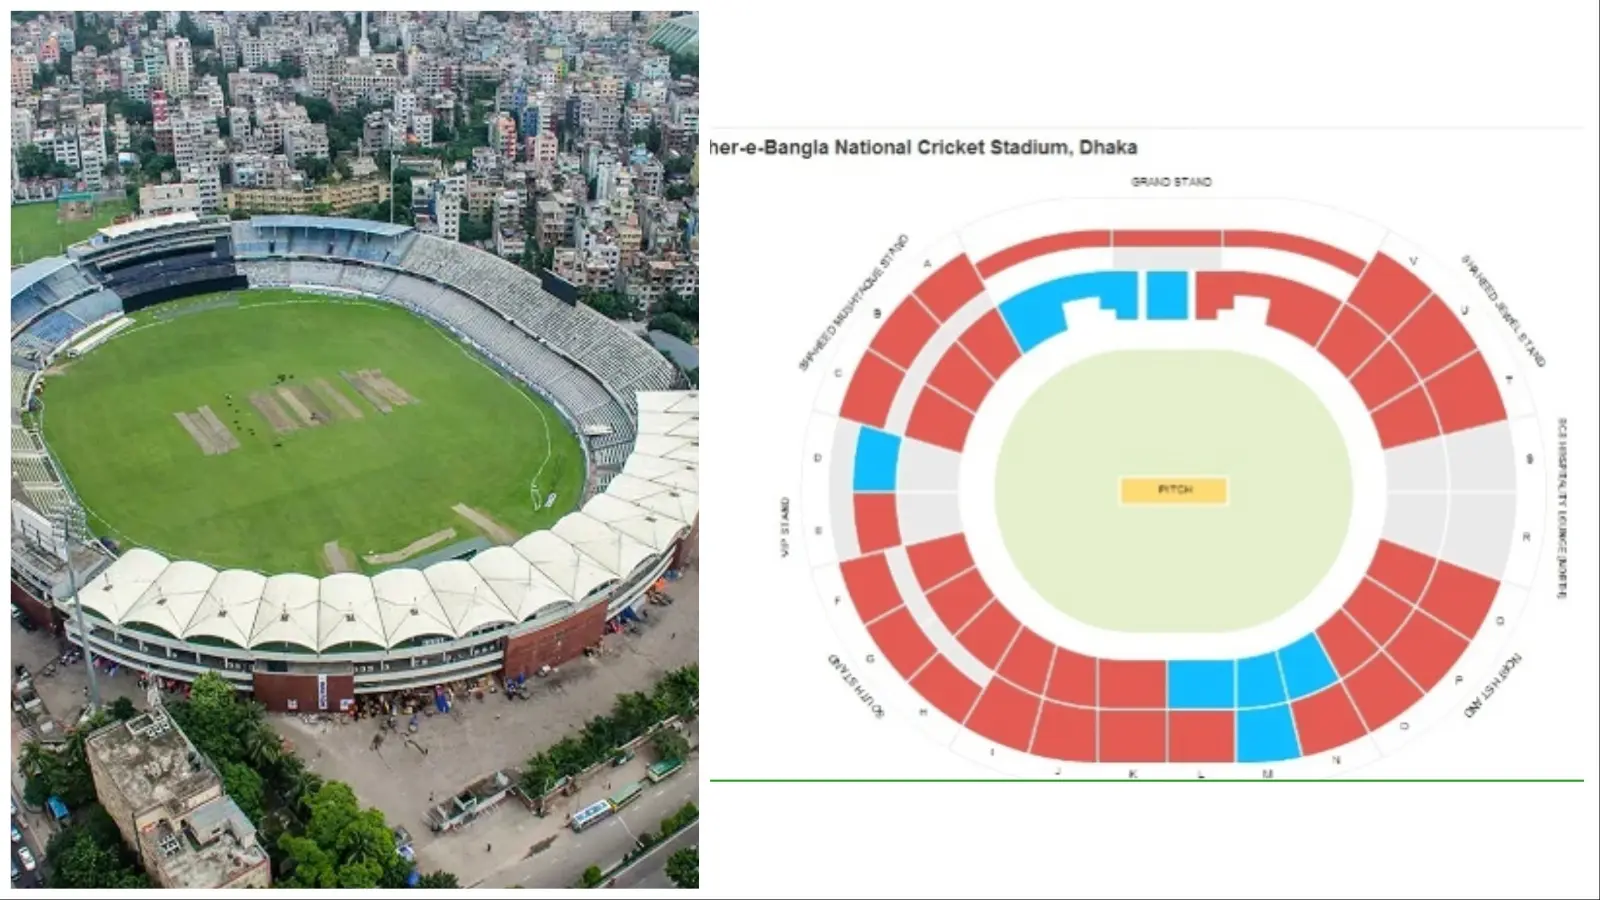 Shere Bangla National Cricket Stadium Dhaka Boundary Length And Seating Capacity